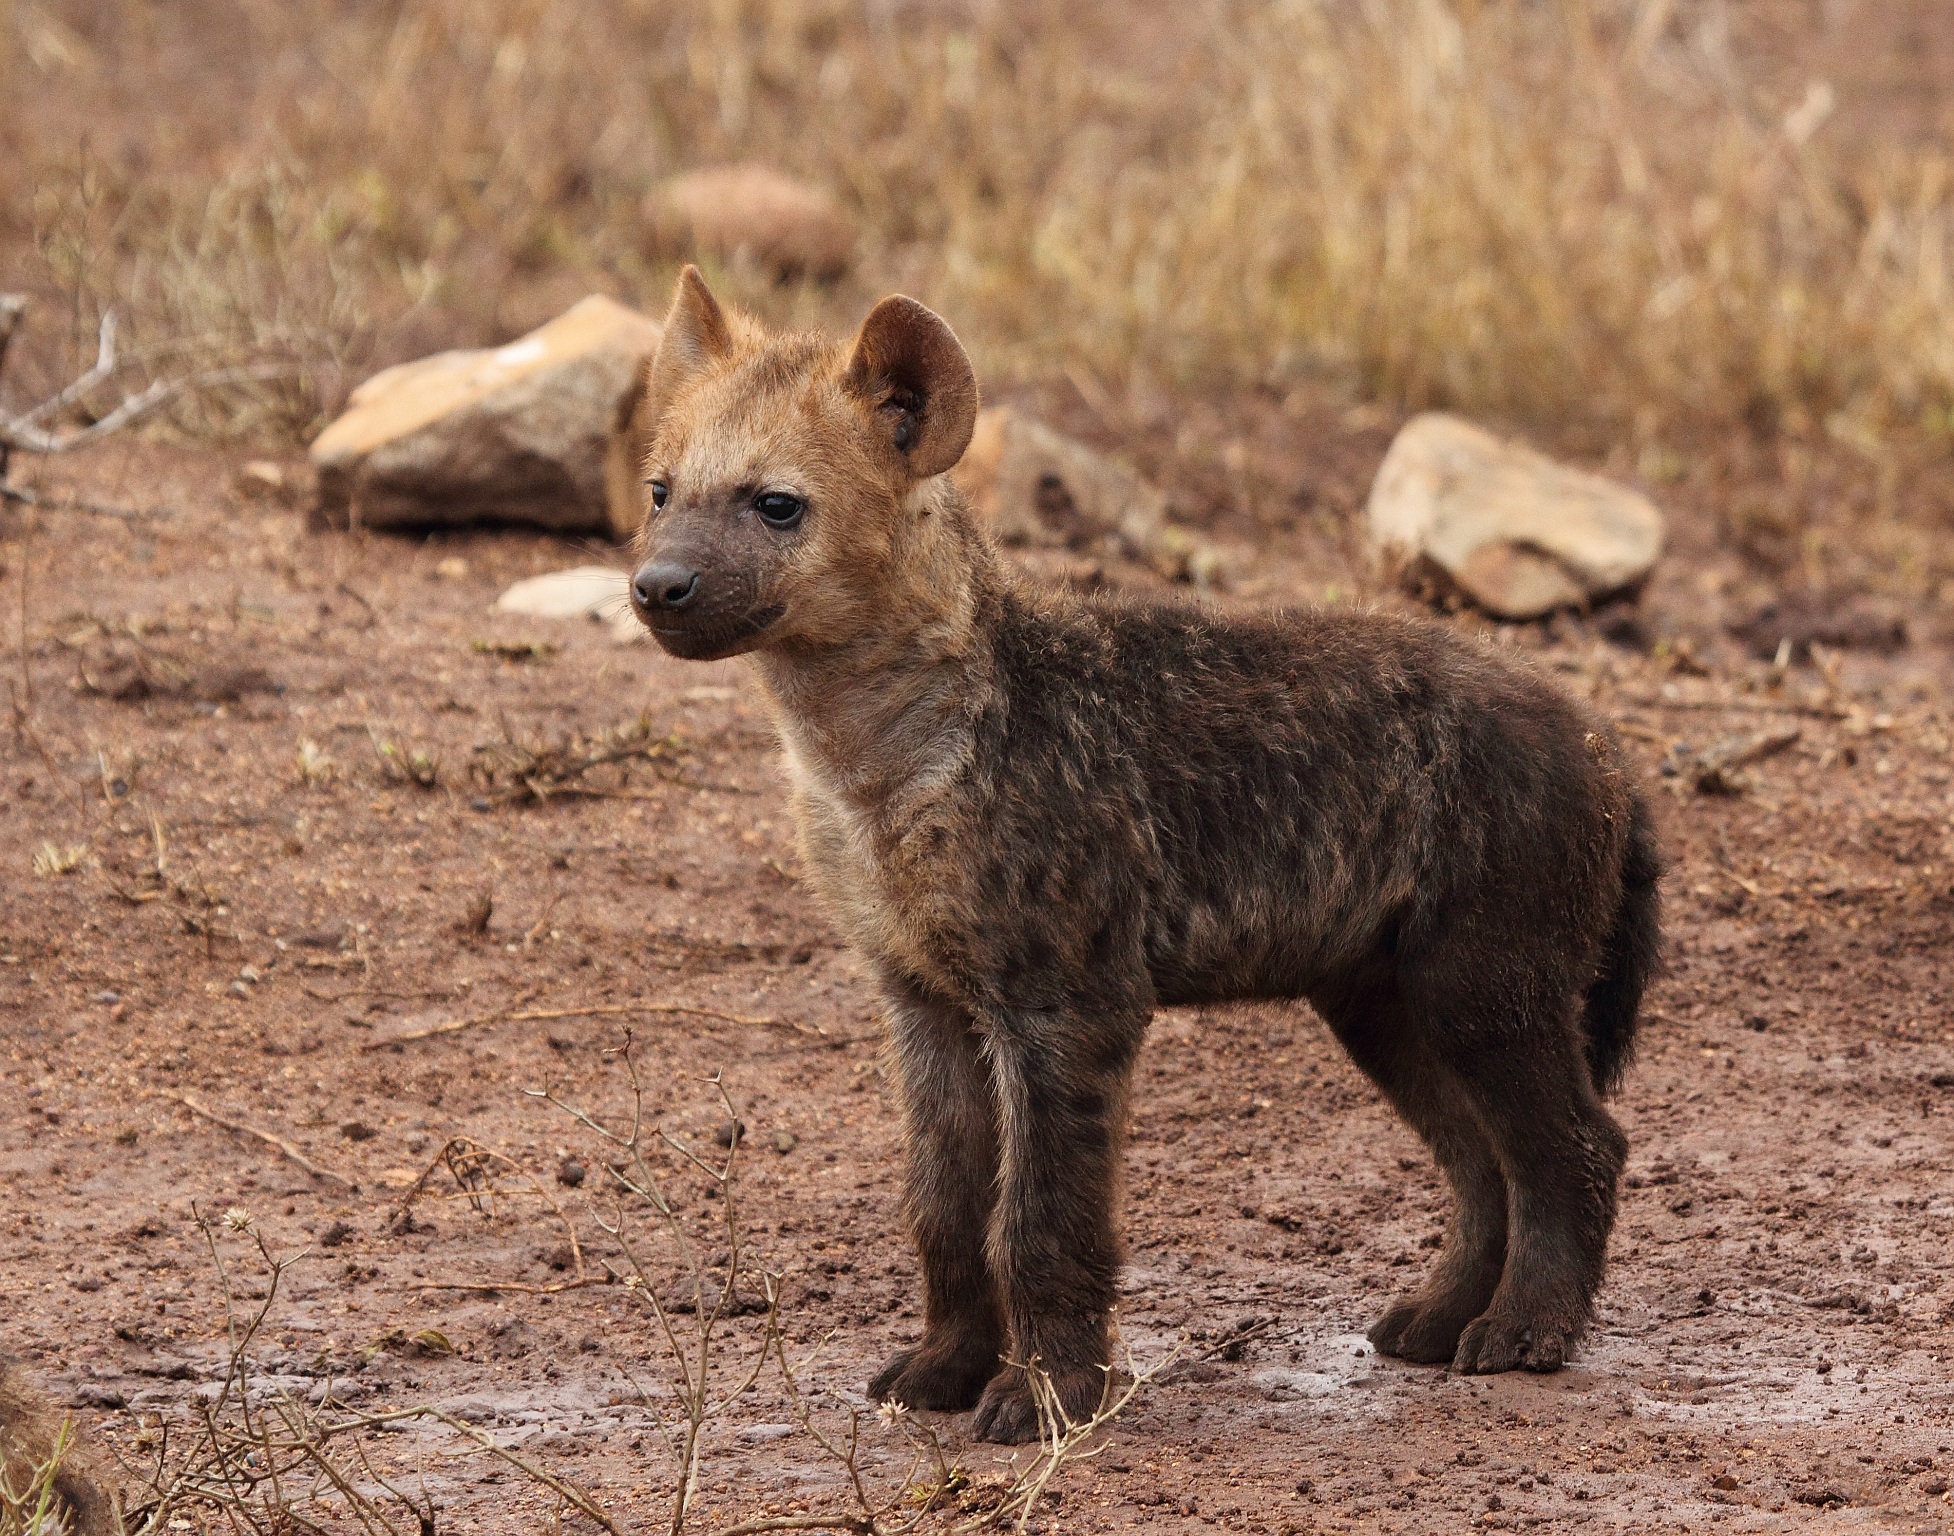 Baby Hyena Cub HD Wallpaper Background Image 1954x1536 1954x1536